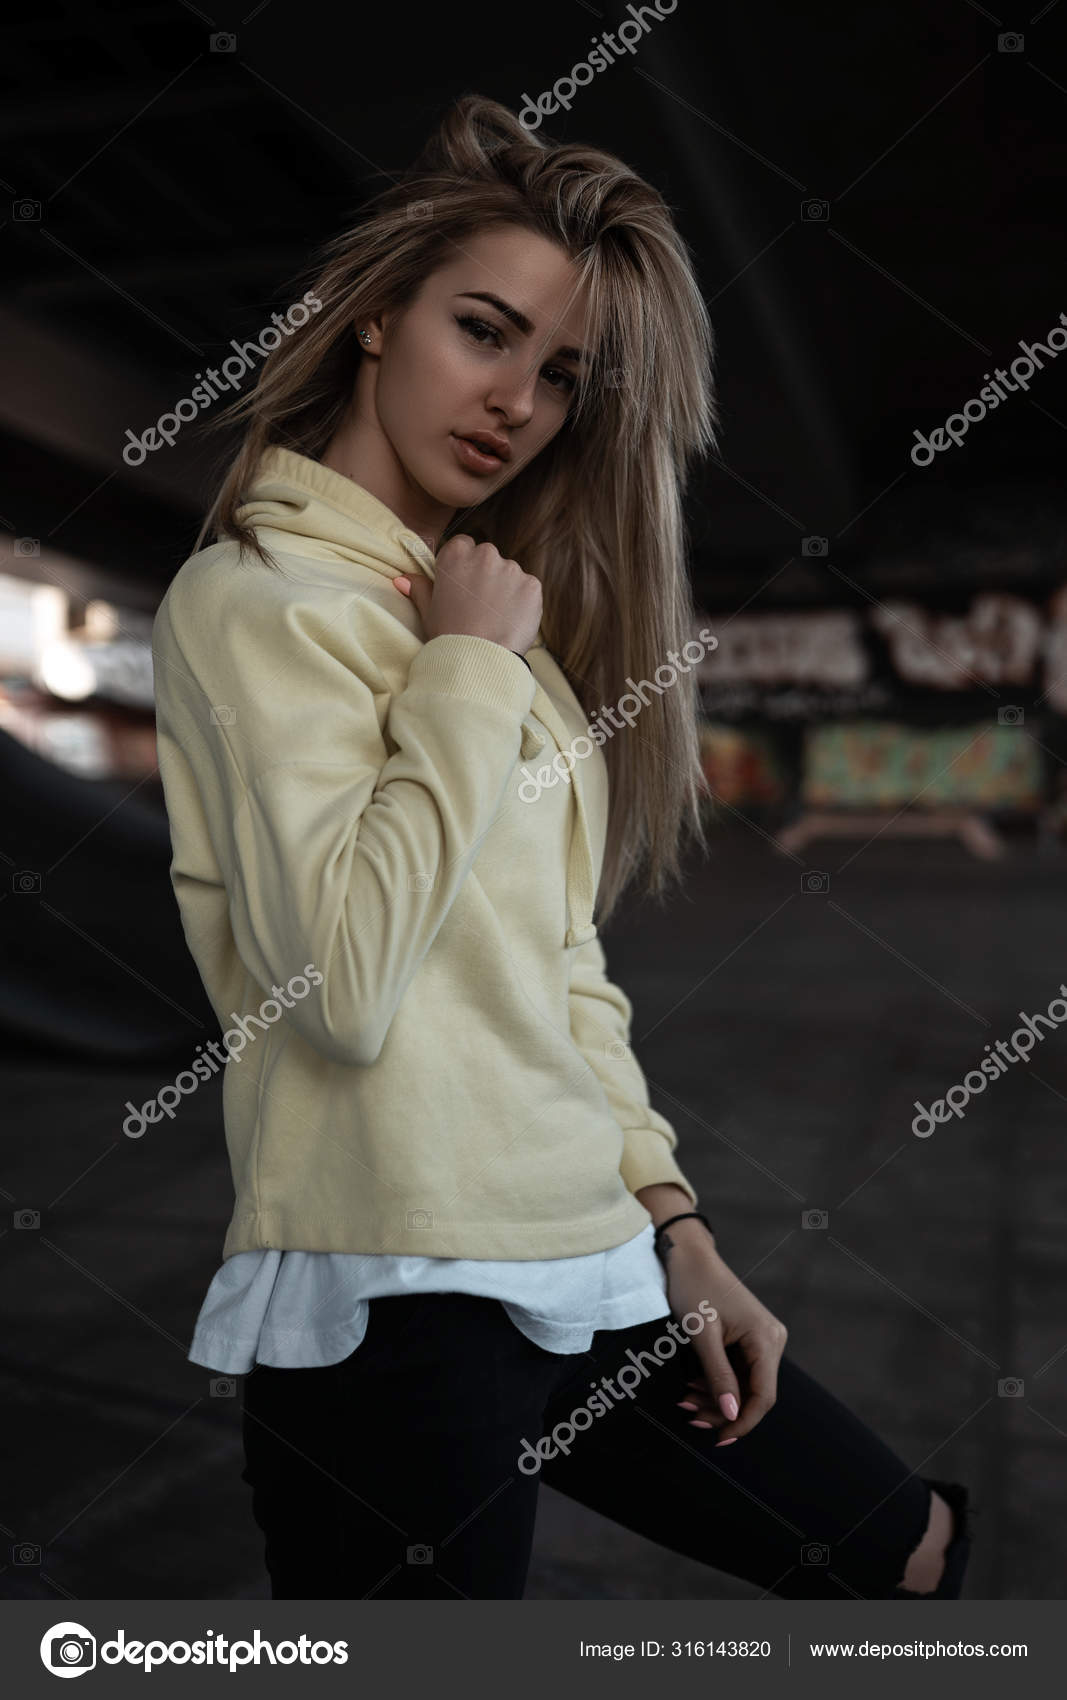 https://st4.depositphotos.com/28476324/31614/i/1600/depositphotos_316143820-stock-photo-cute-sexy-woman-casual-clothes.jpg